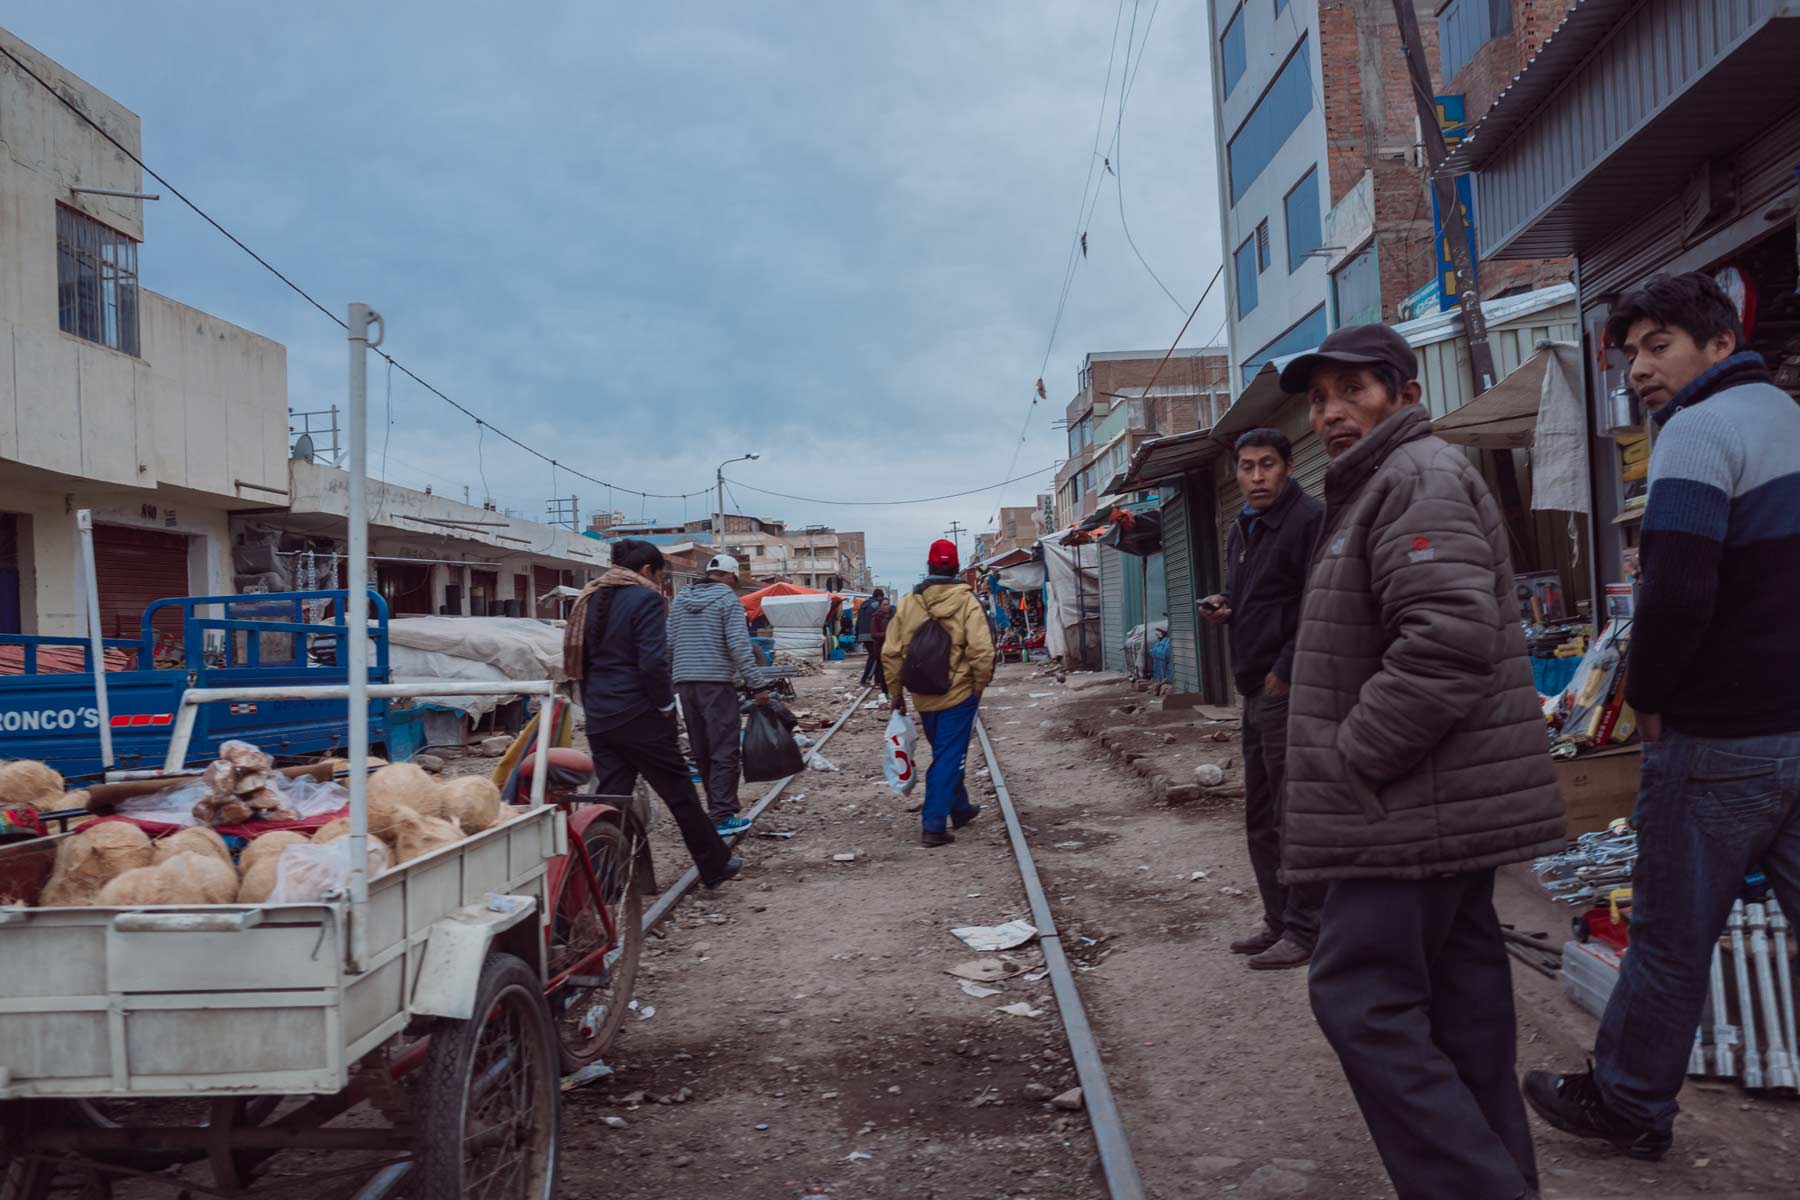 Men walk to work through an outdoor market along Peru's railroad in Juliaca.